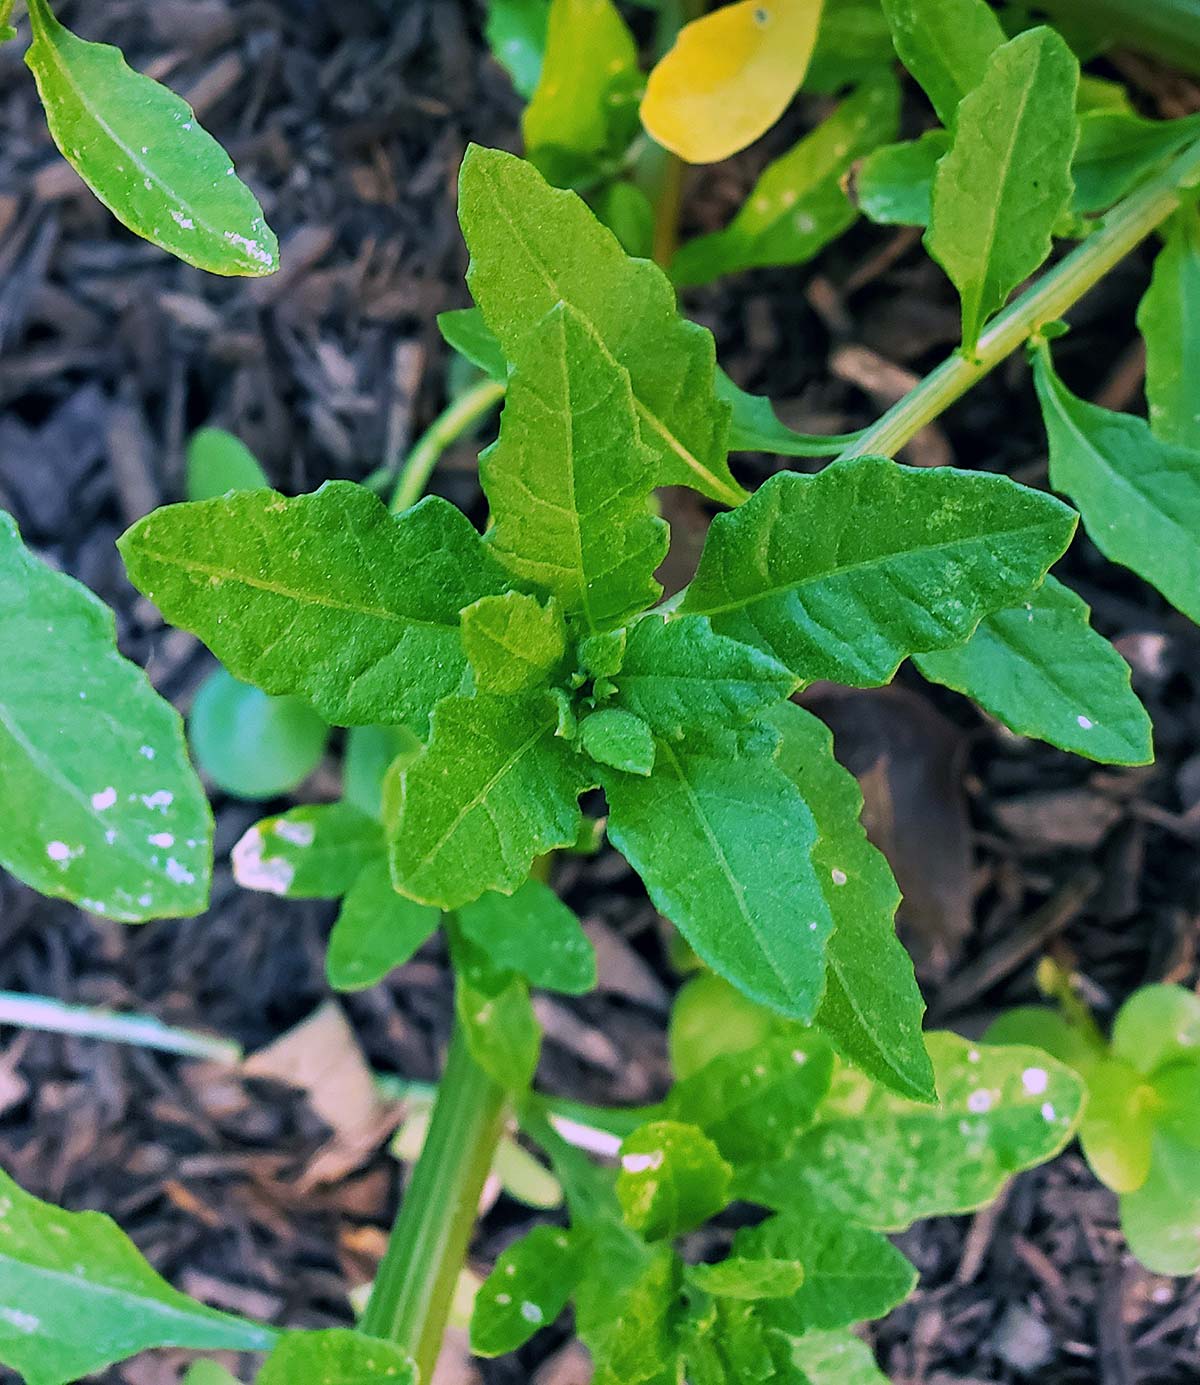 Healthy epazote plant growing in my garden